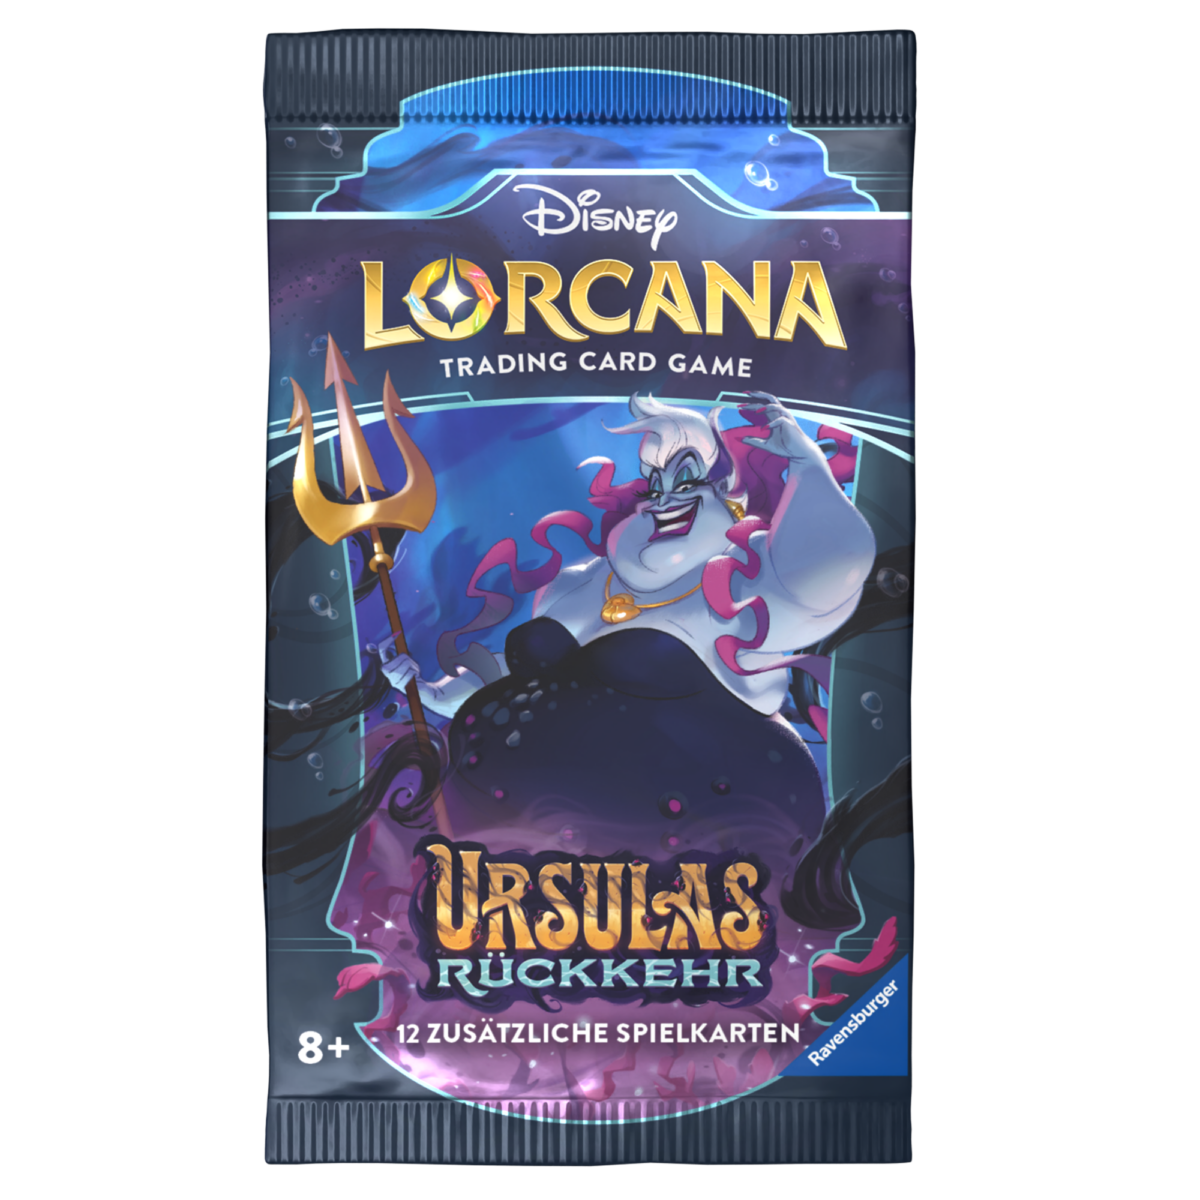 Disney Lorcana Trading Card Game: Kapitel 4 - Ursulas Rückkehr: Booster Pack Ursula